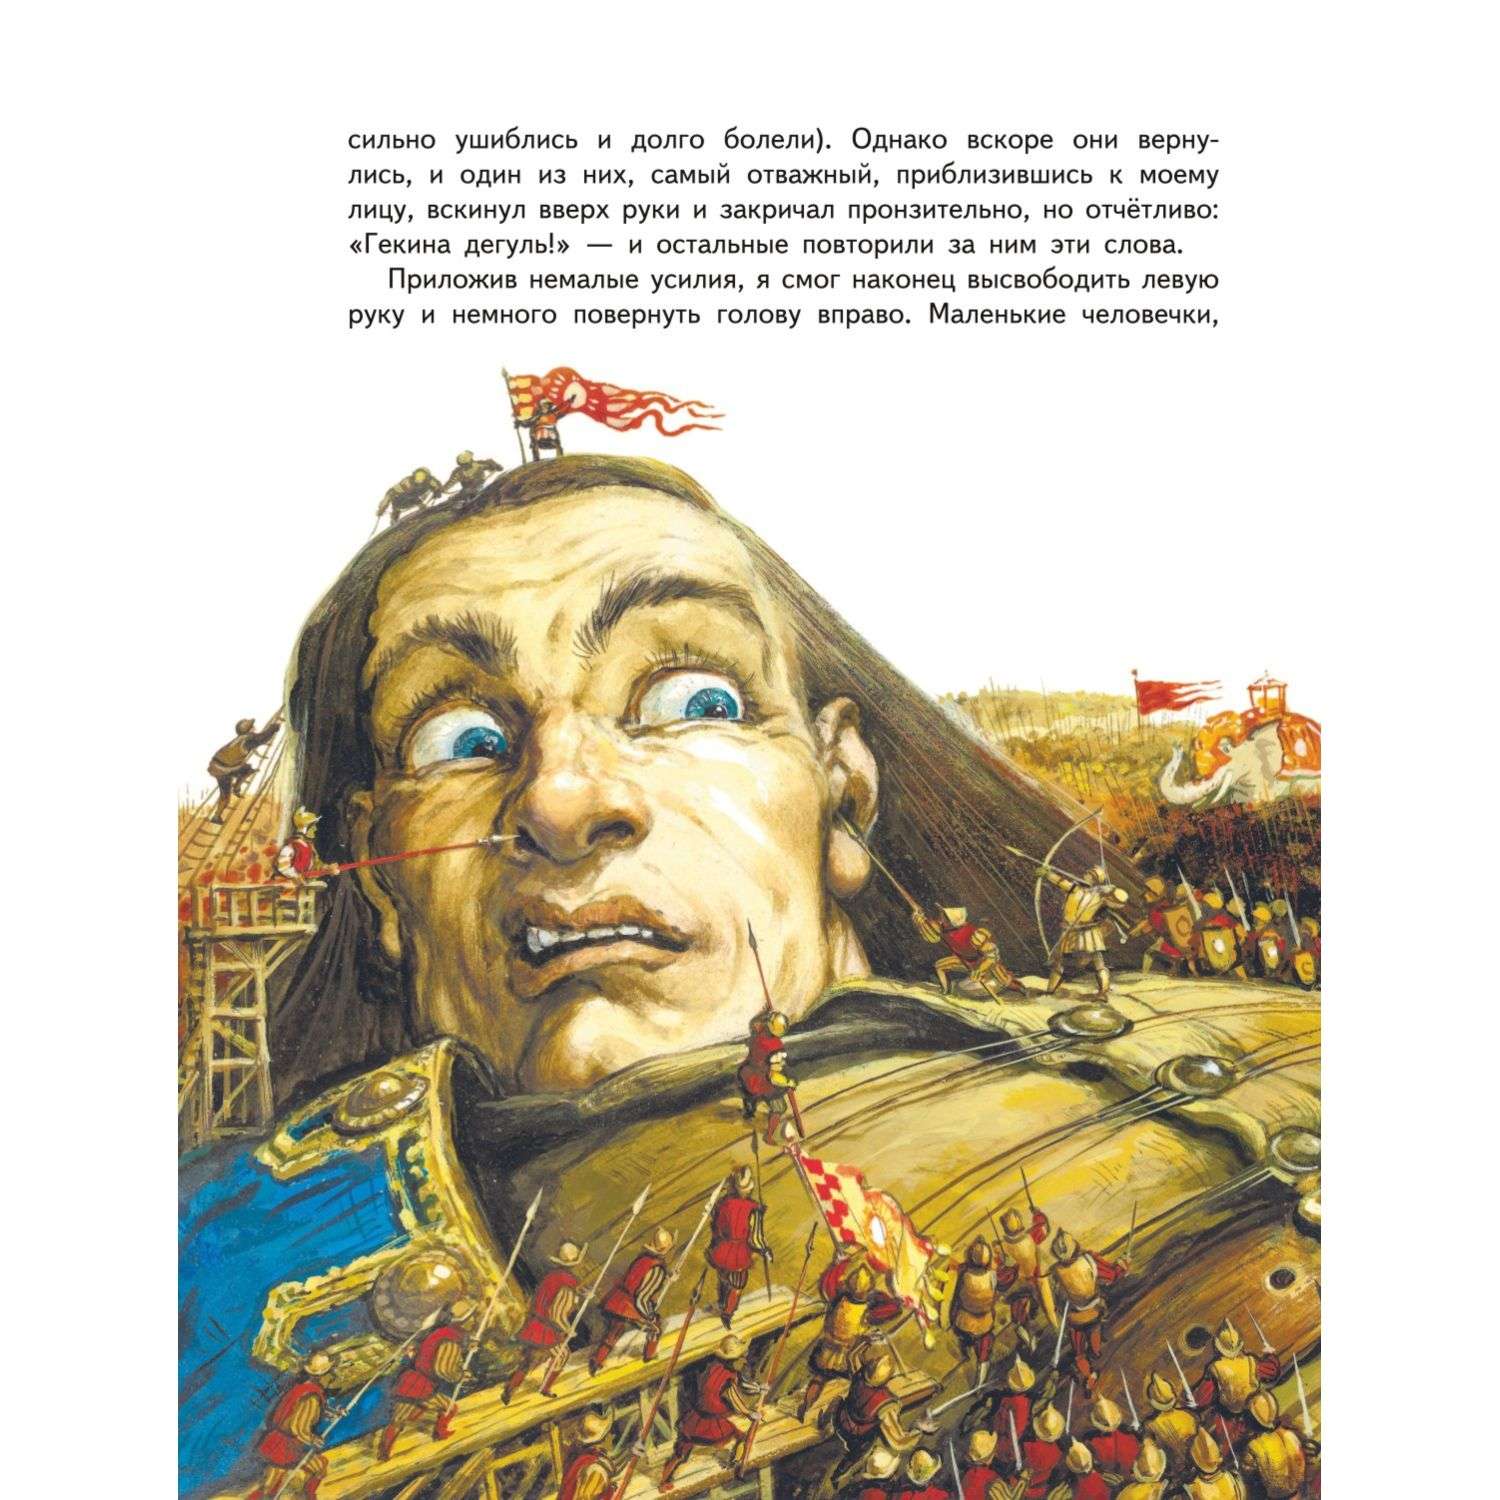 Книга Гулливер в стране лилипутов иллюстрации А.Симанчука - фото 6